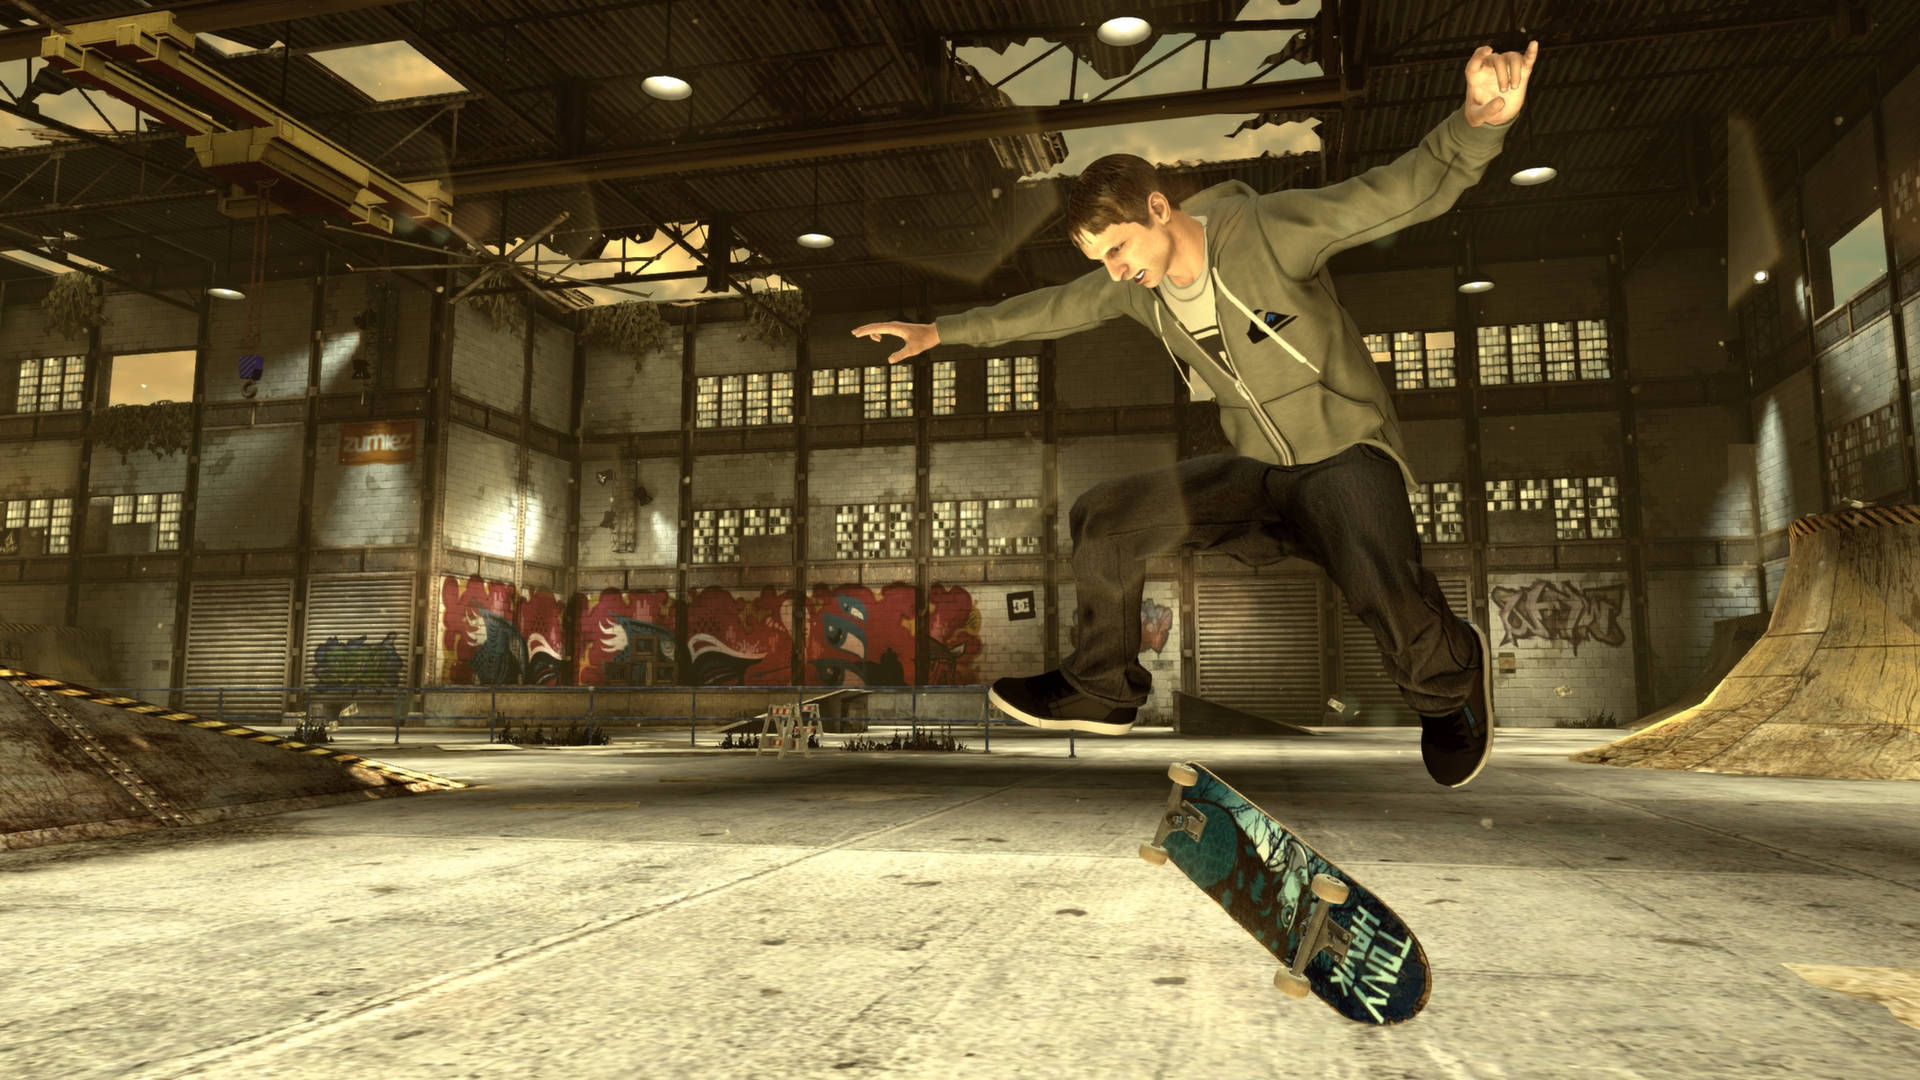 Ipad Pro Tony Hawk In Abandoned Skate Rink Background